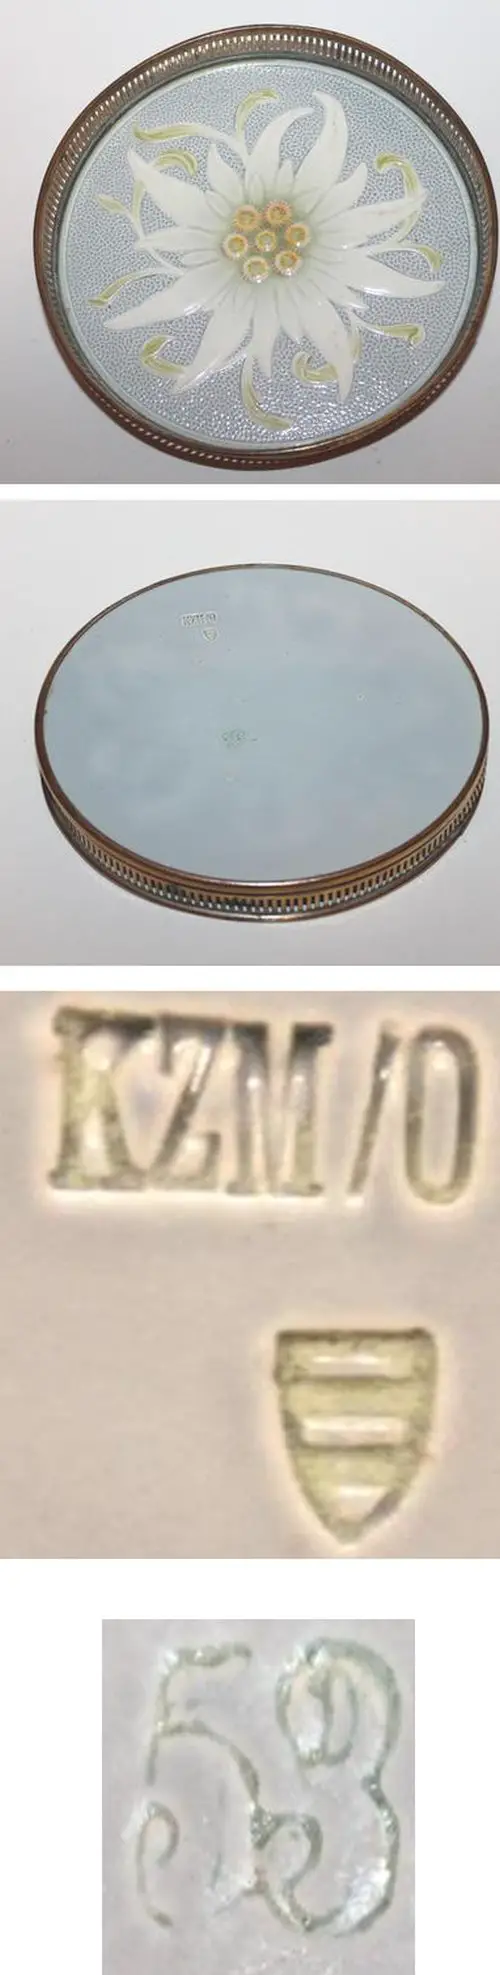 kzm0-vienna-shield-beehive-marking